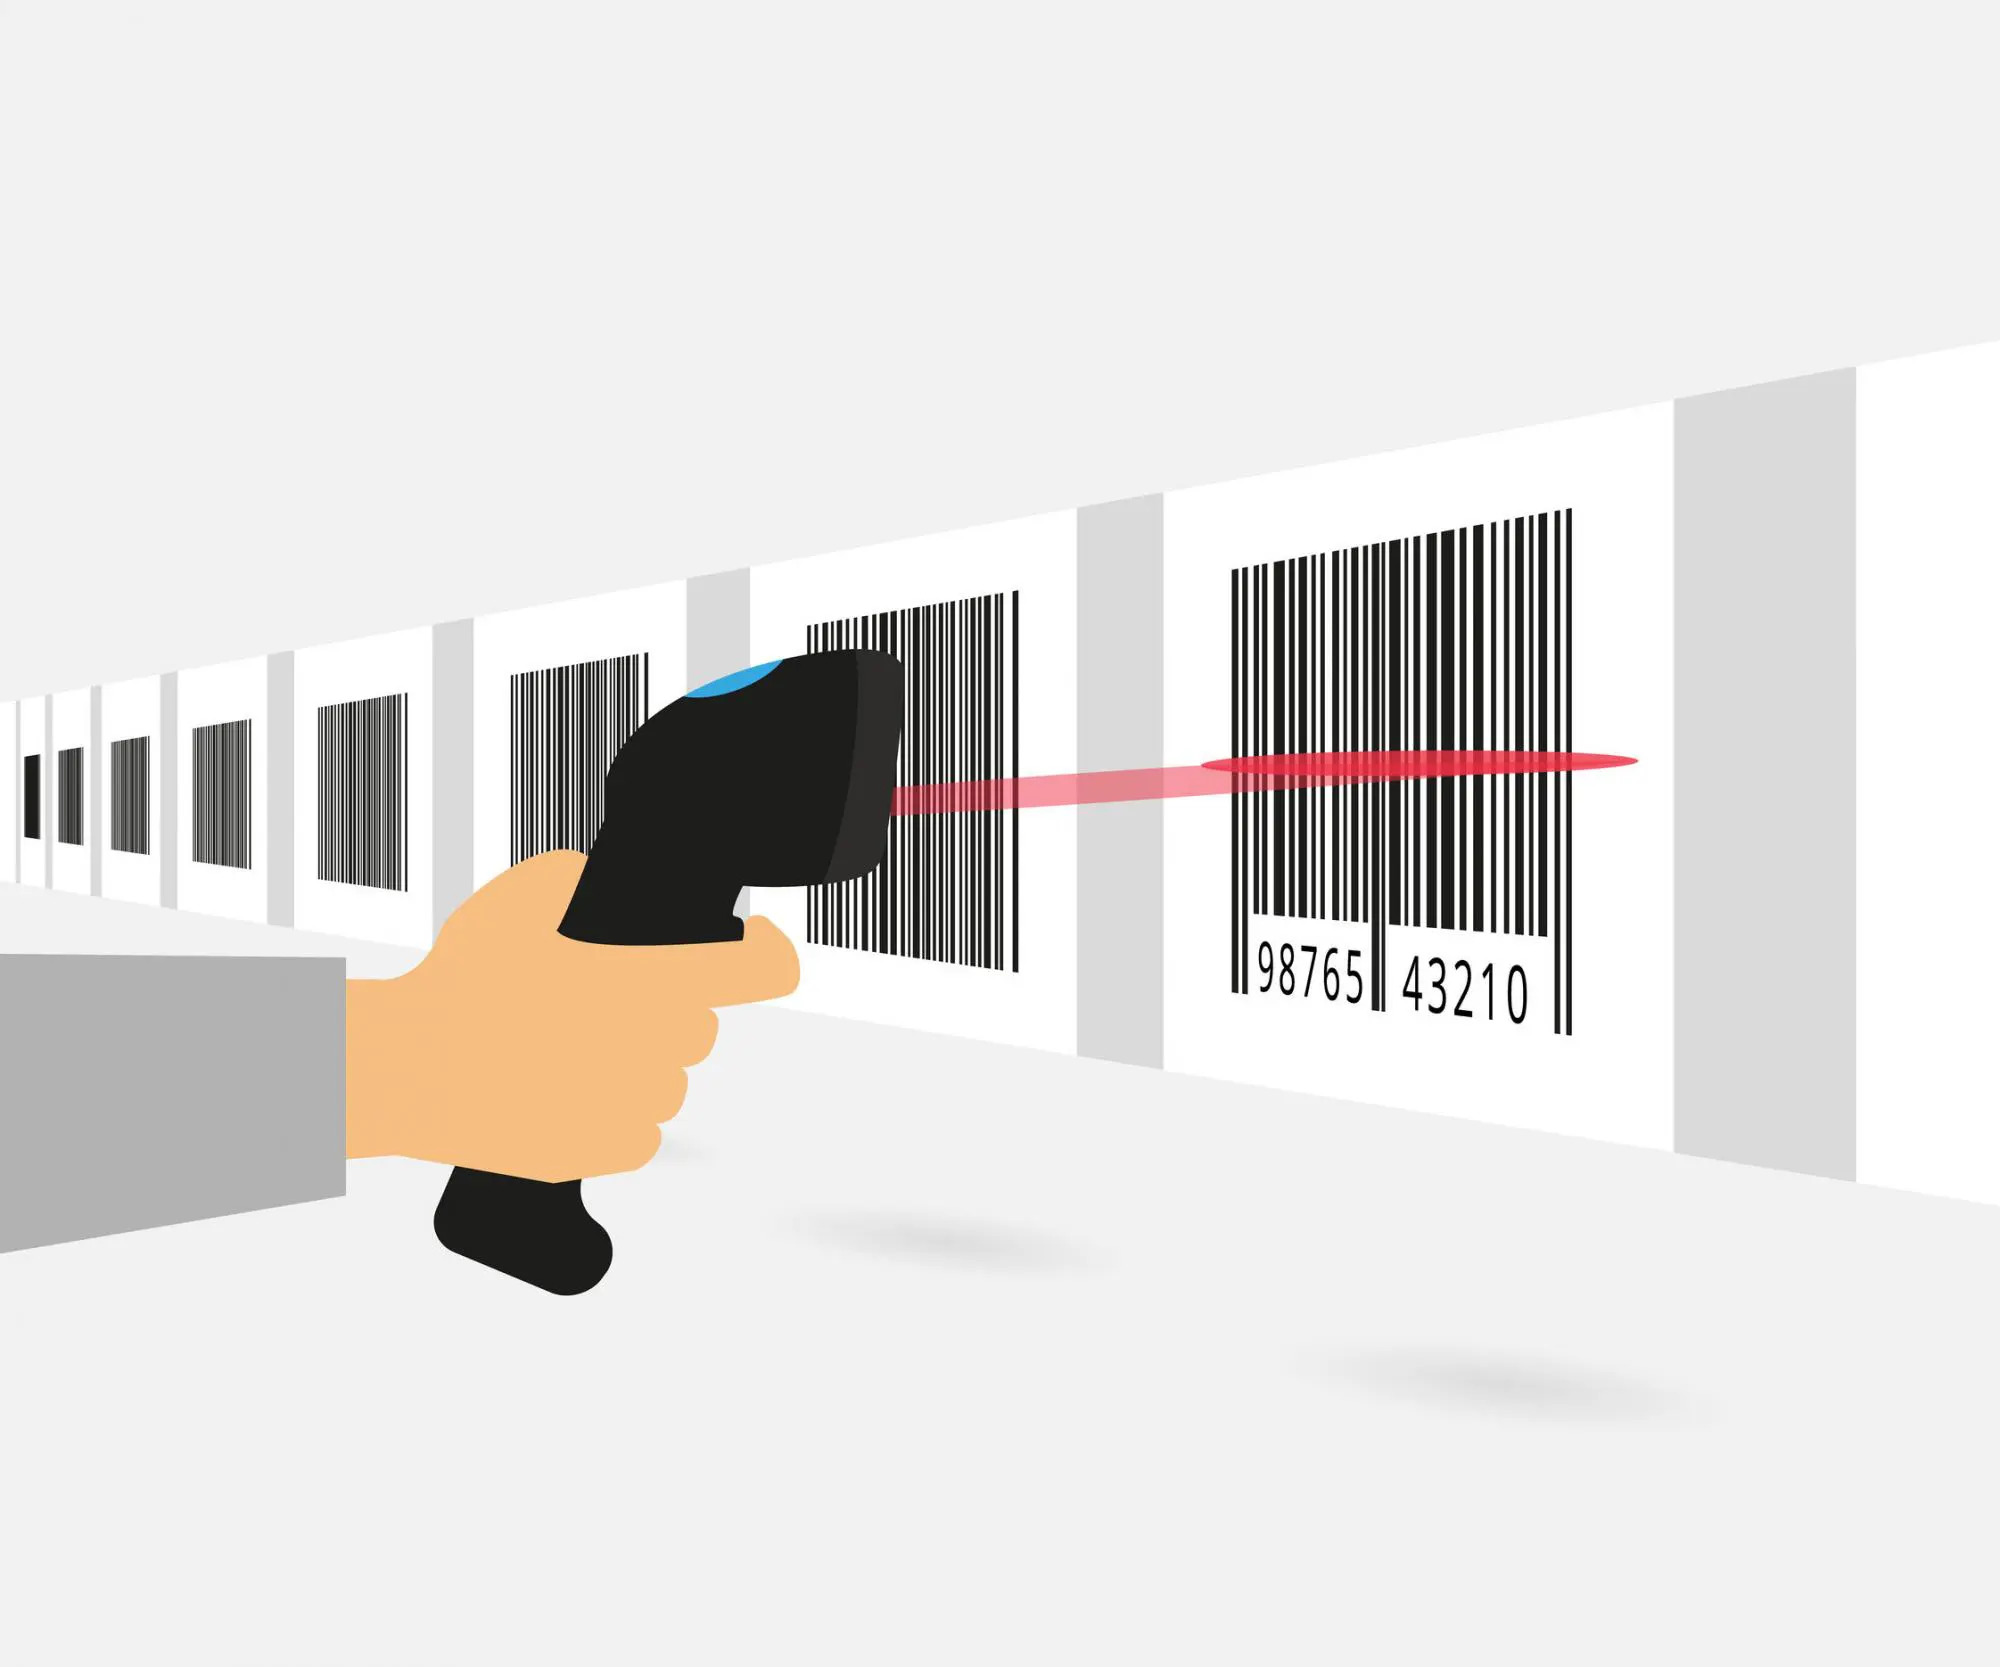 scanning barcodes - SKU